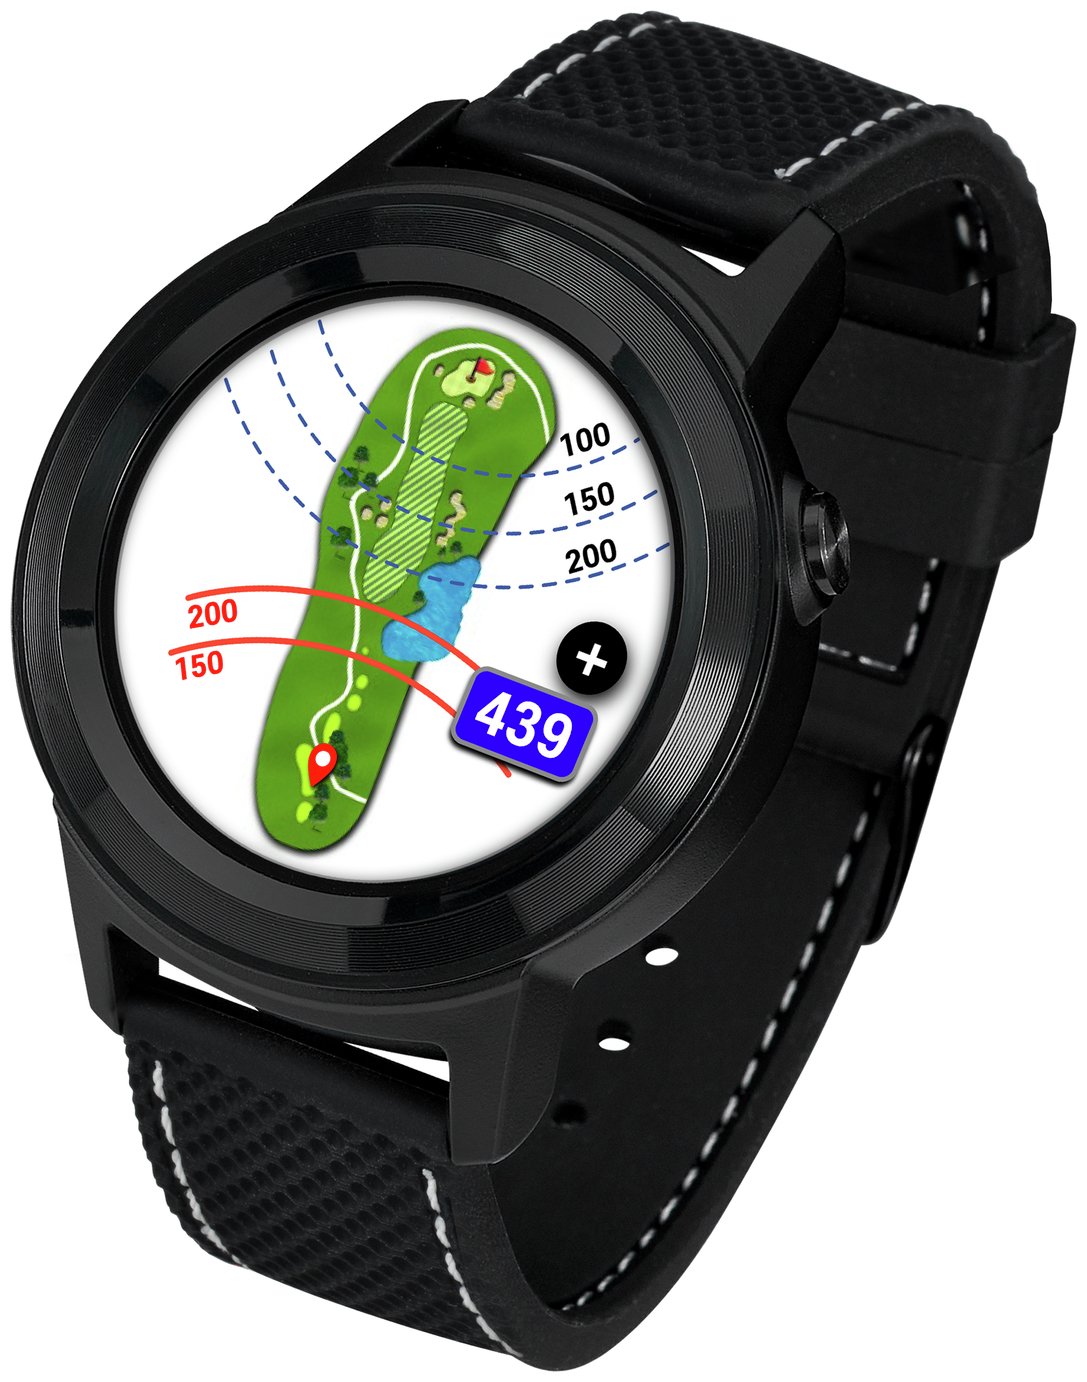 Buy GolfBuddy Aim W11 Golf GPS Smart Watch Golf accessories Argos